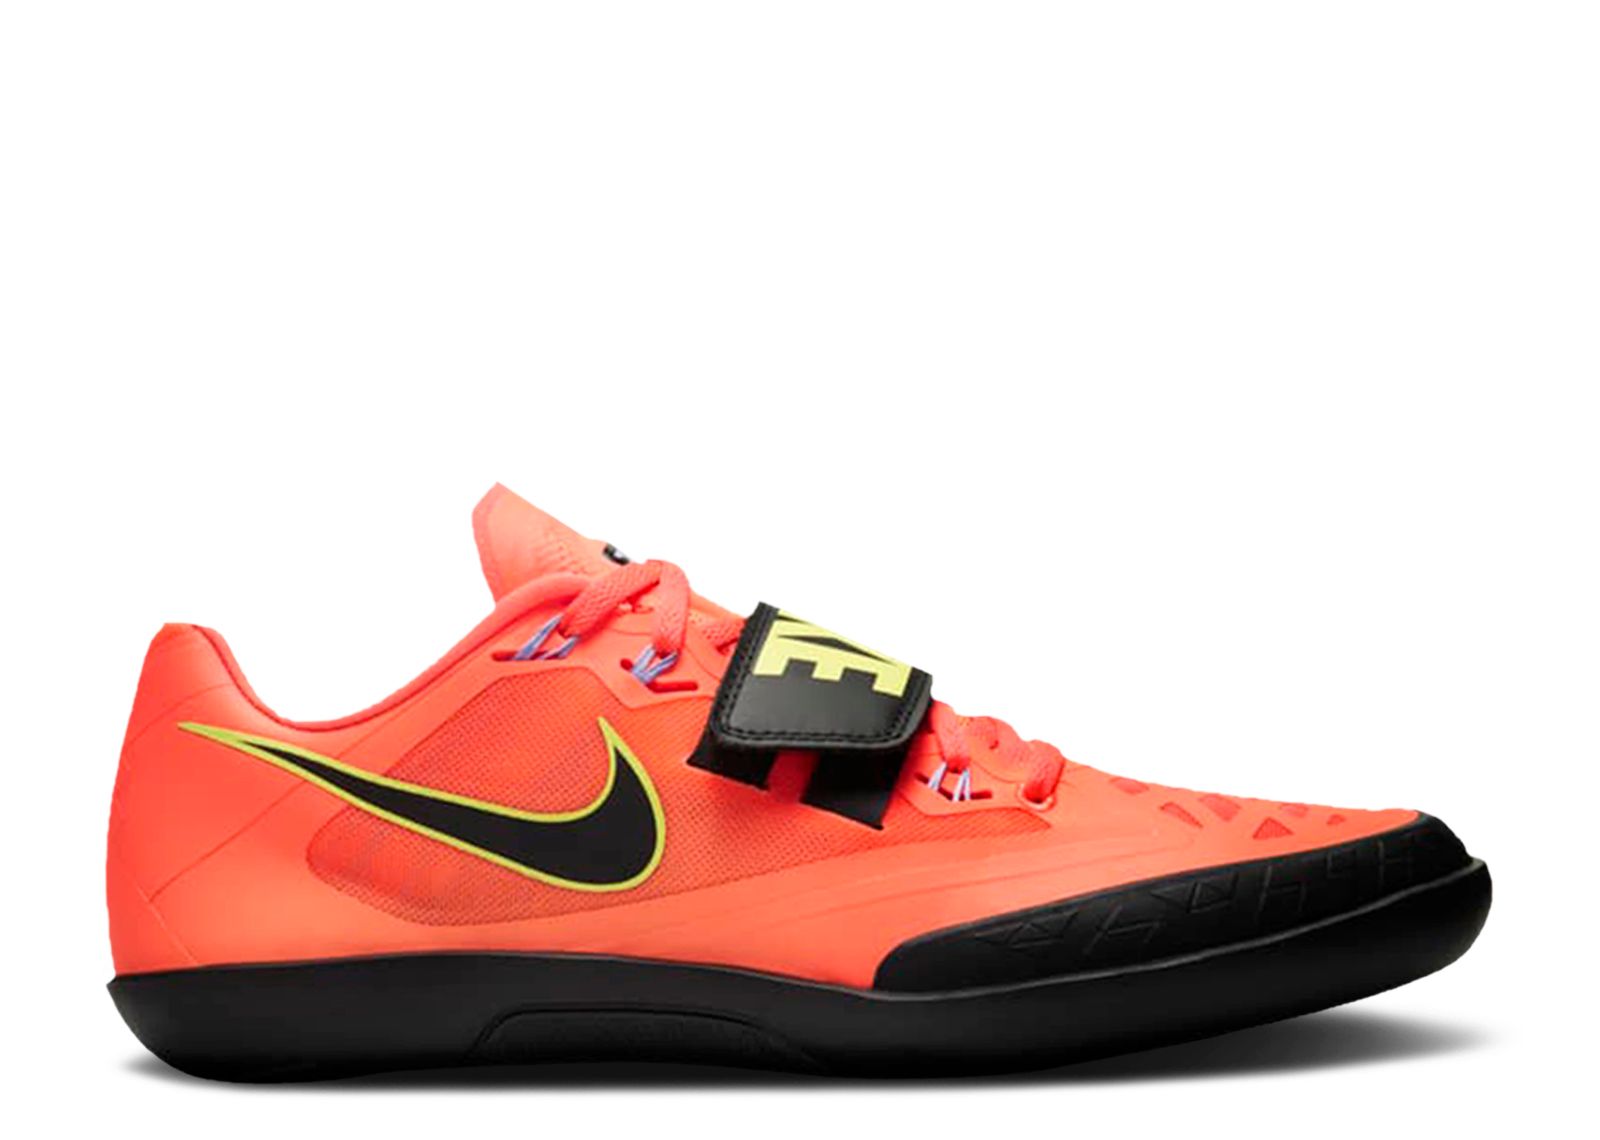 Zoom SD 4 'Bright - Nike - 685135 800 - bright mango/light zitron/purple pulse/black | Flight Club